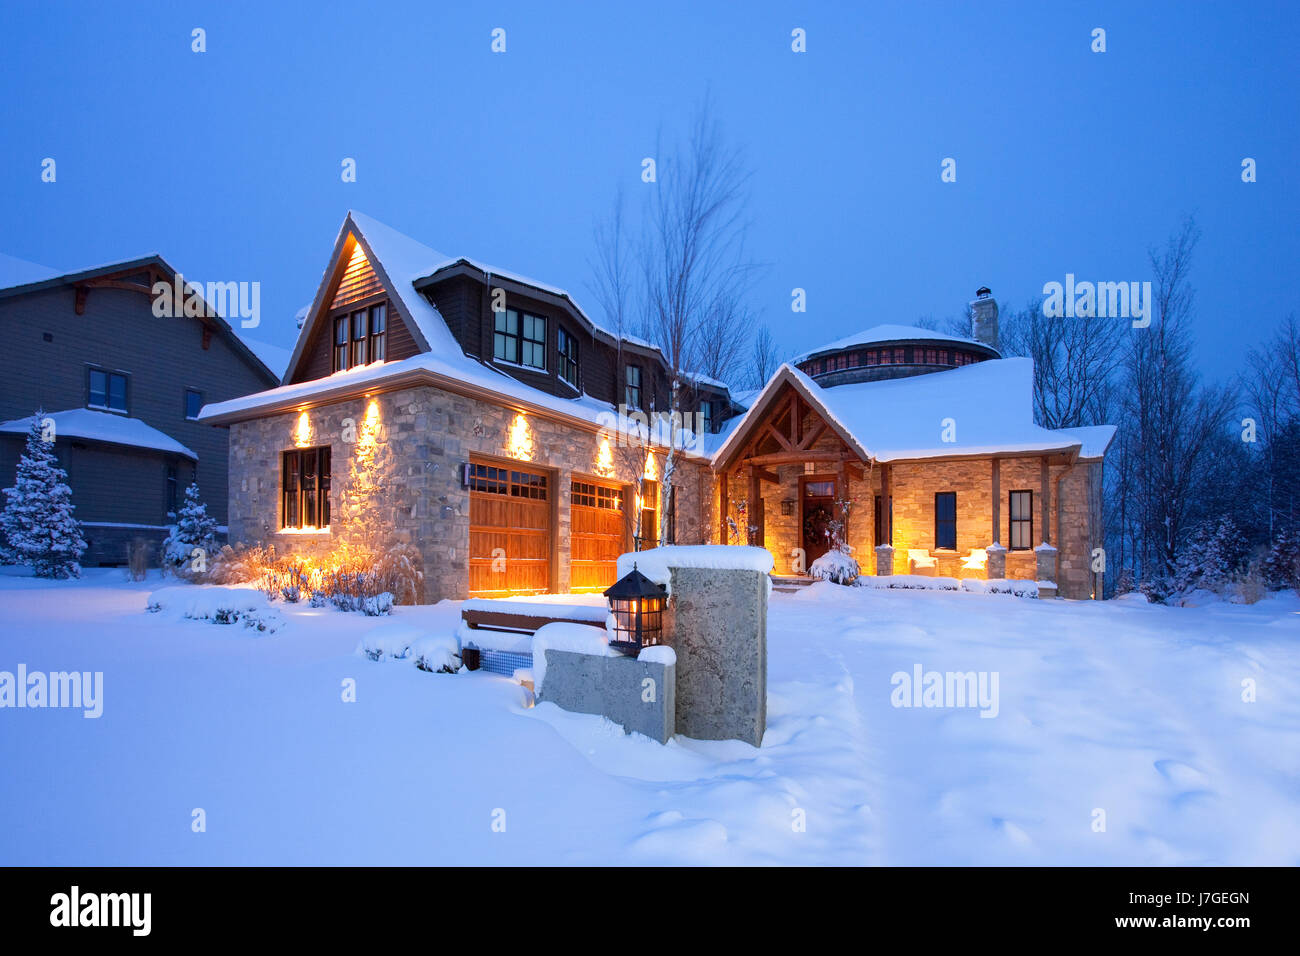 North America, Canada, Ontario, stone house with Christmas wreath Stock Photo